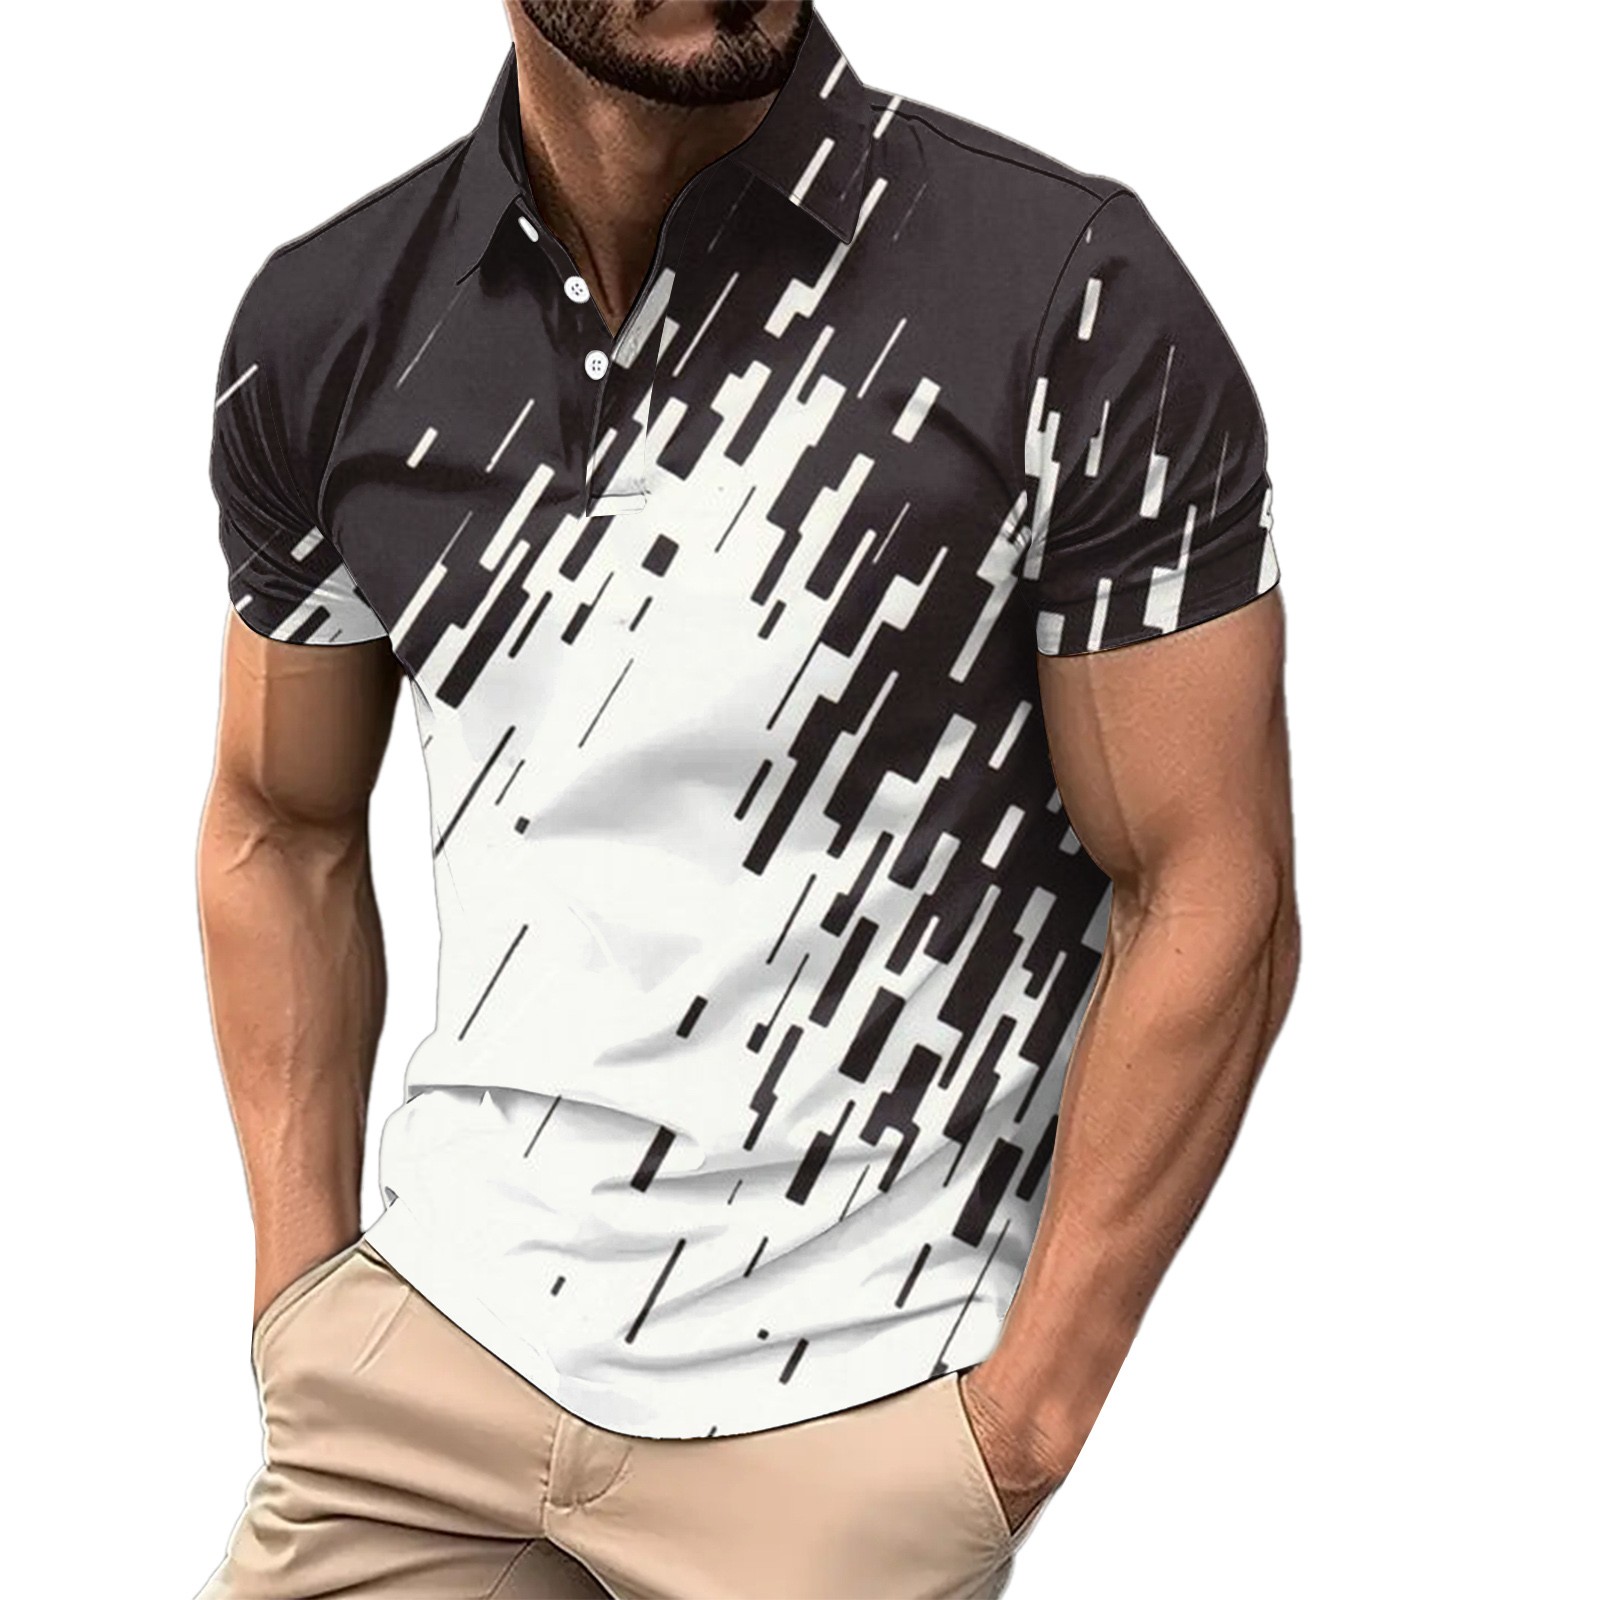 Mnyotv Gifts for Men Men T Shirts Cotton Mens Shirt Large Size Base ...